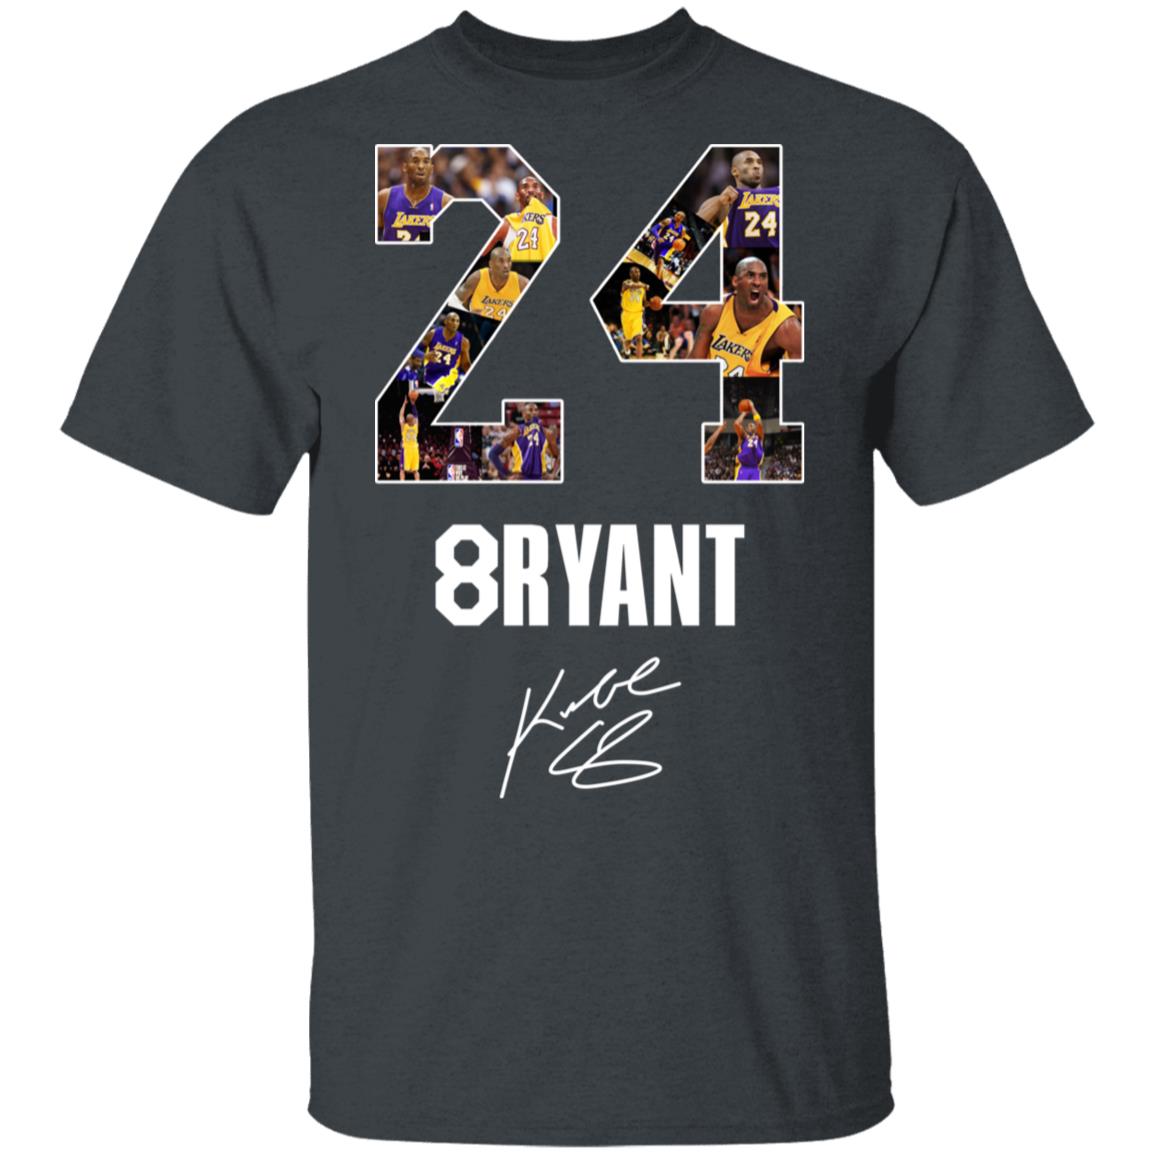 Buy NOT Womens Kobe-Bryant Tees Black XL at